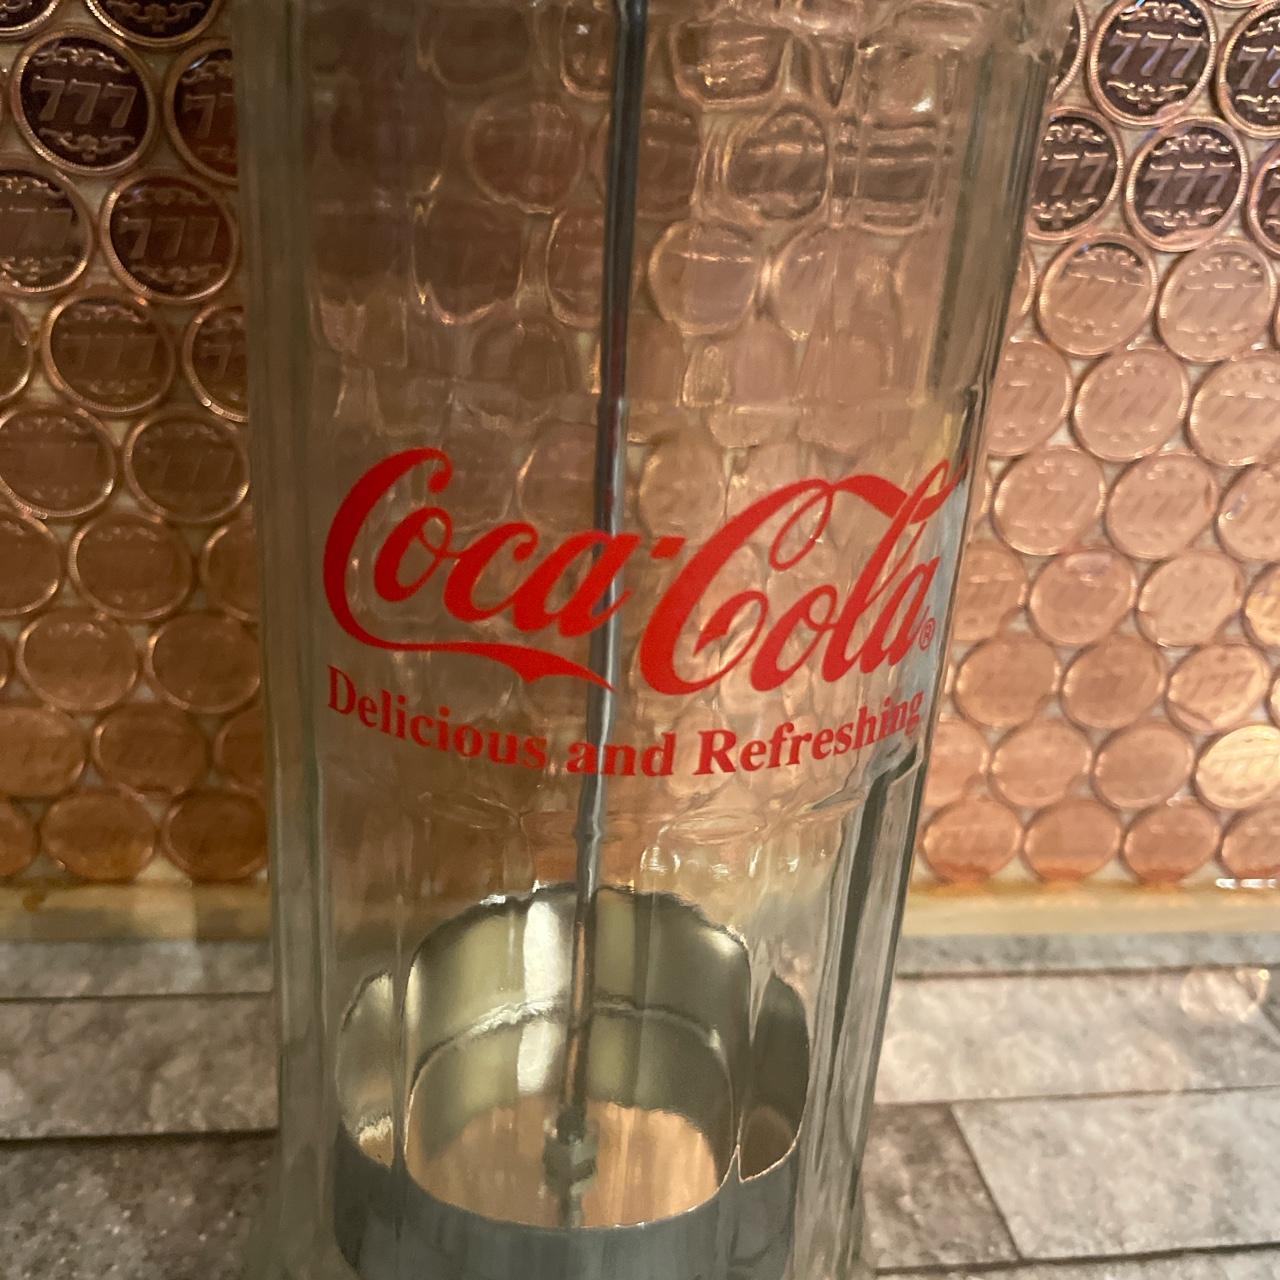 Vintage Coca-cola Glass Drinking Straw Dispenser/ Holder 